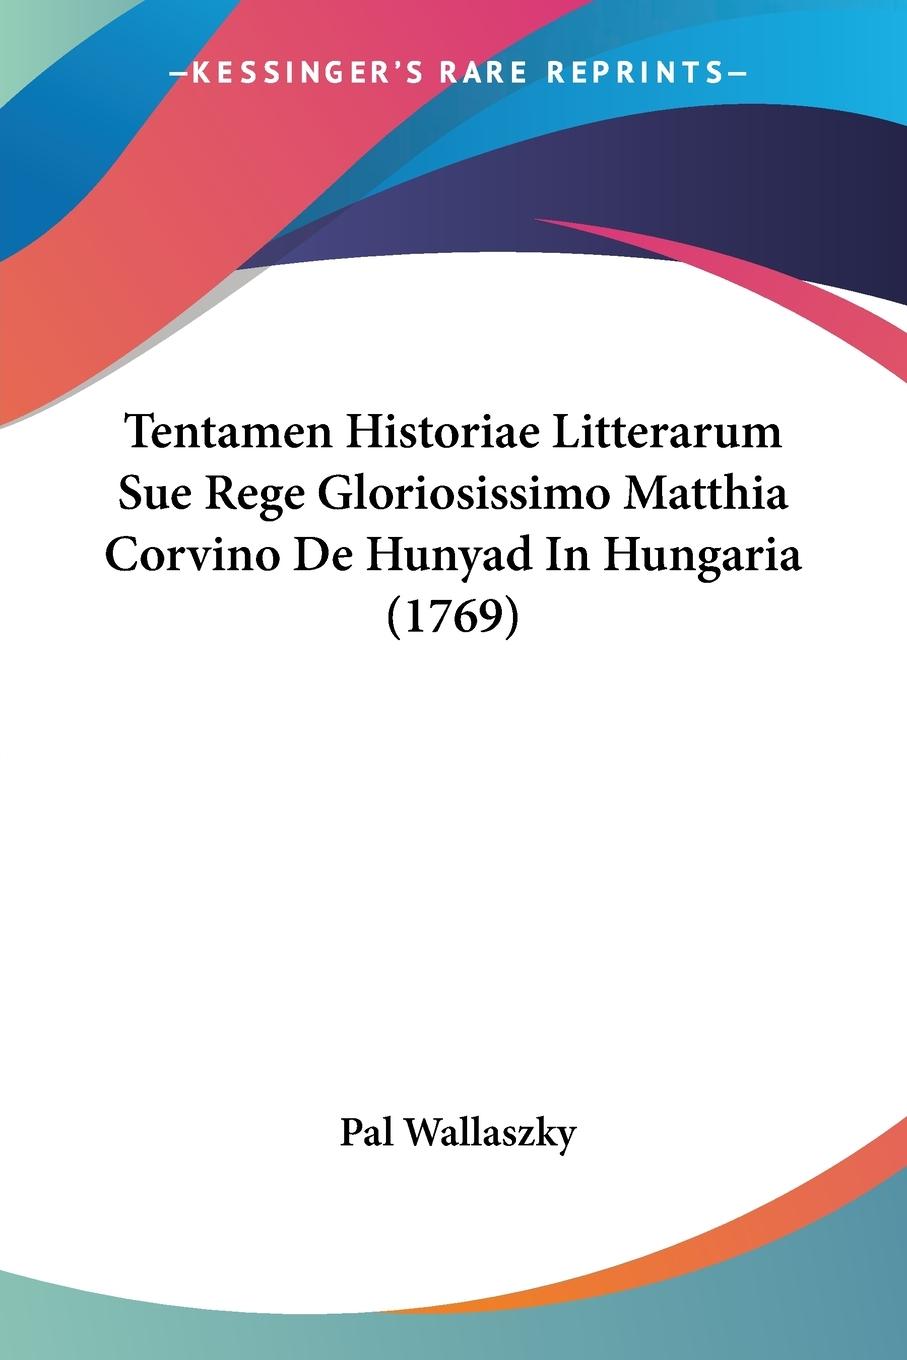 Tentamen Historiae Litterarum Sue Rege Gloriosissimo Matthia Corvino De Hunyad In Hungaria (1769) (Latin Edition)